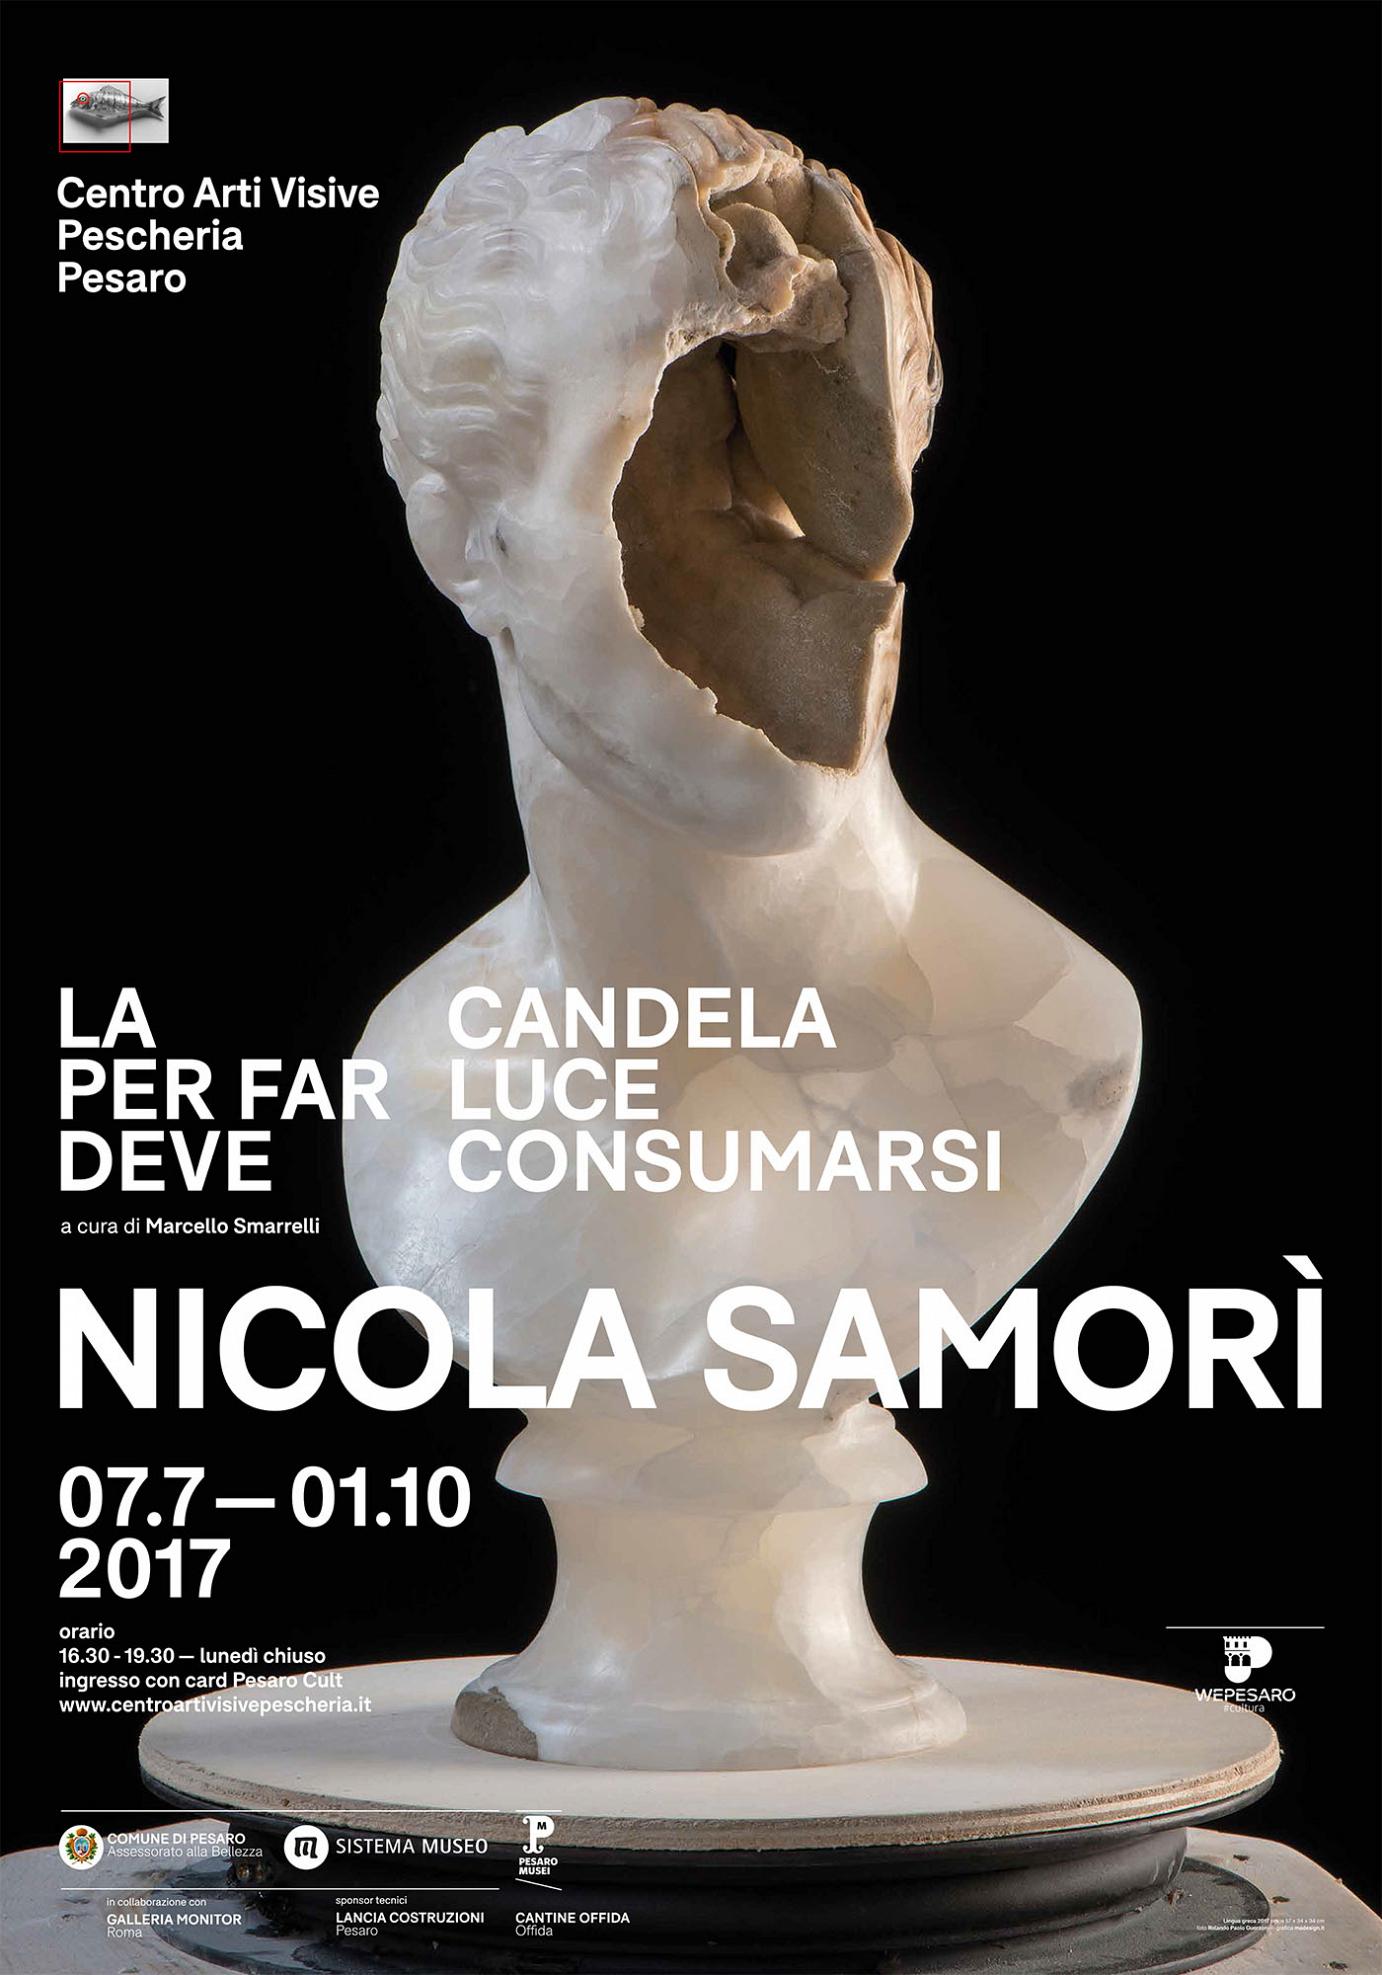 Nicola Samori manifesto